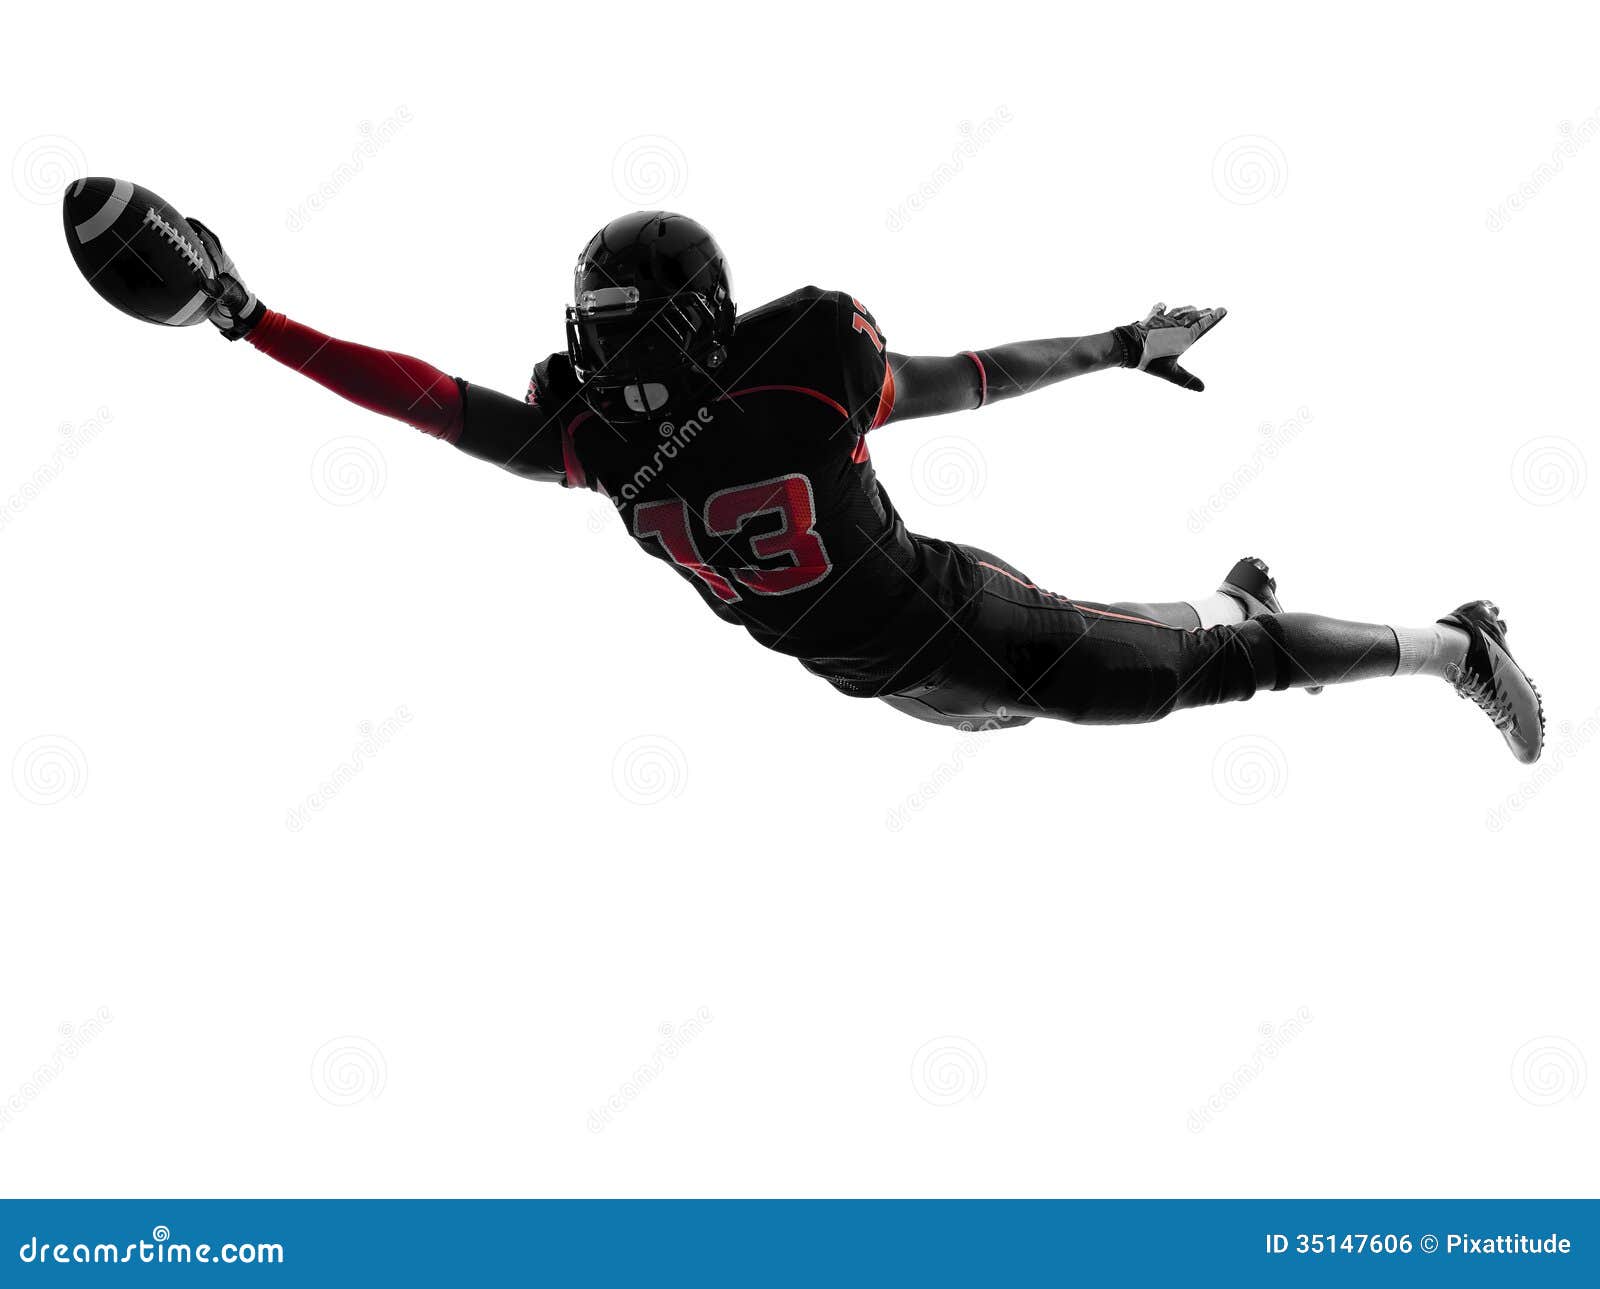 american football player scoring touchdown silhouette